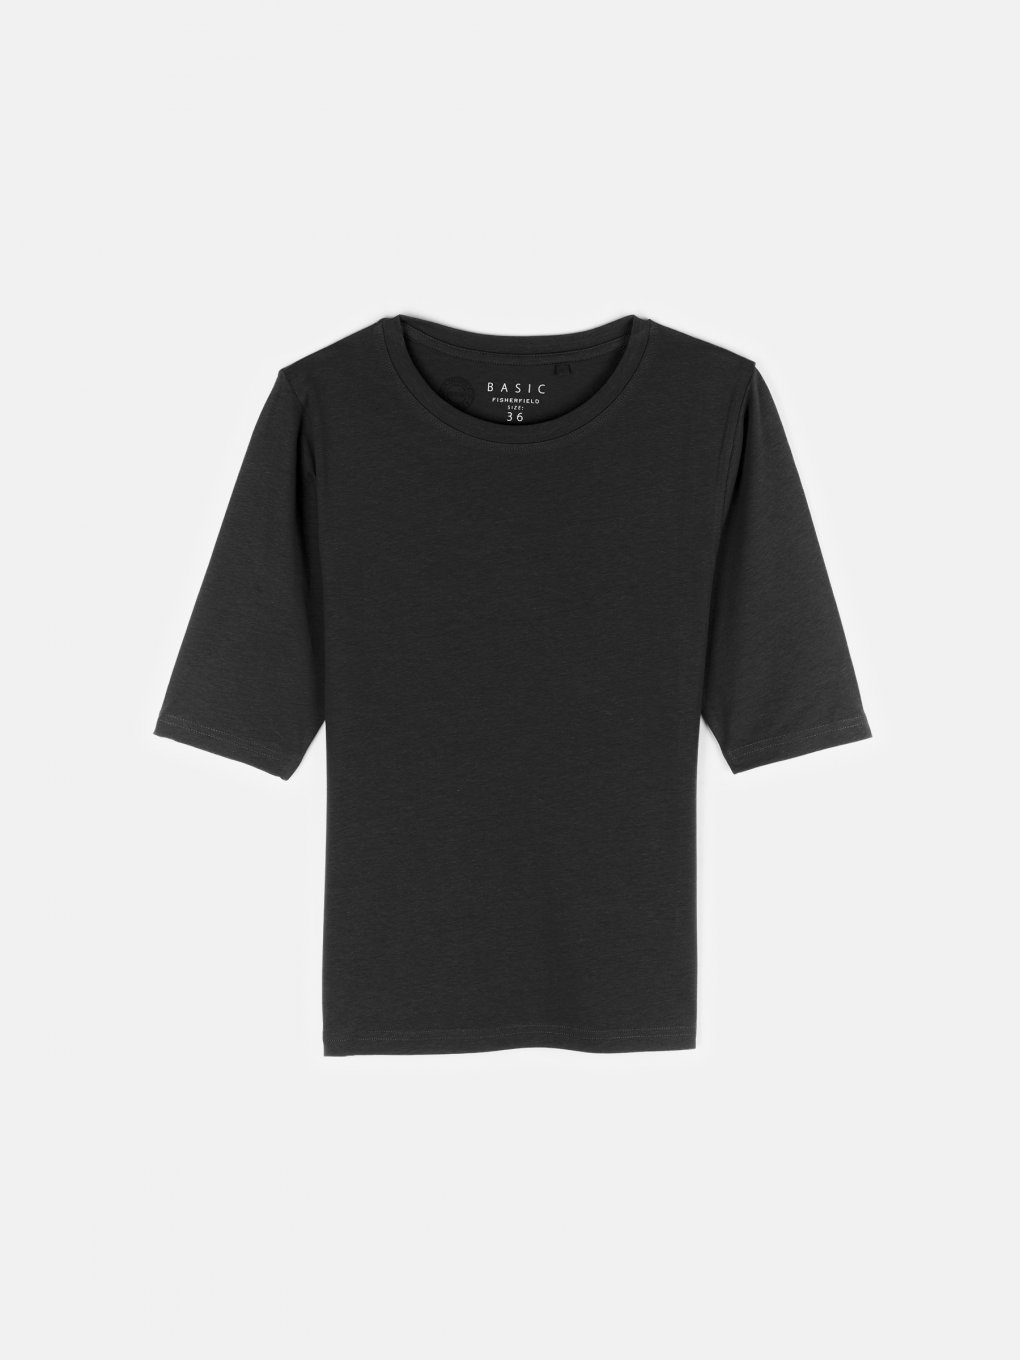 Basic 3/4-sleeve t-shirt